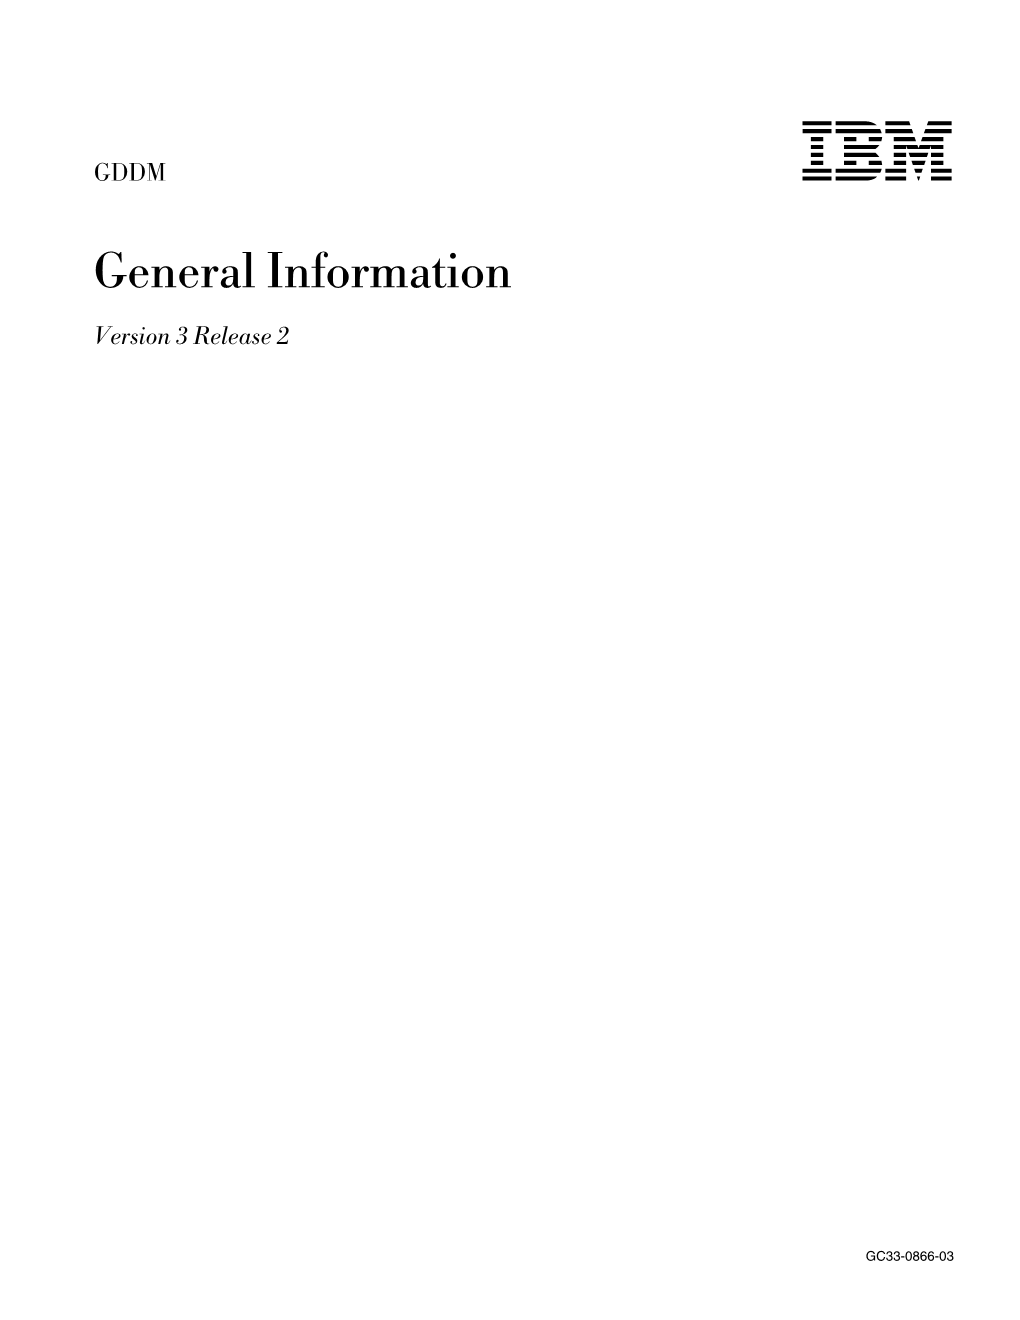 IBM GDDM General Information GC33-0866-03